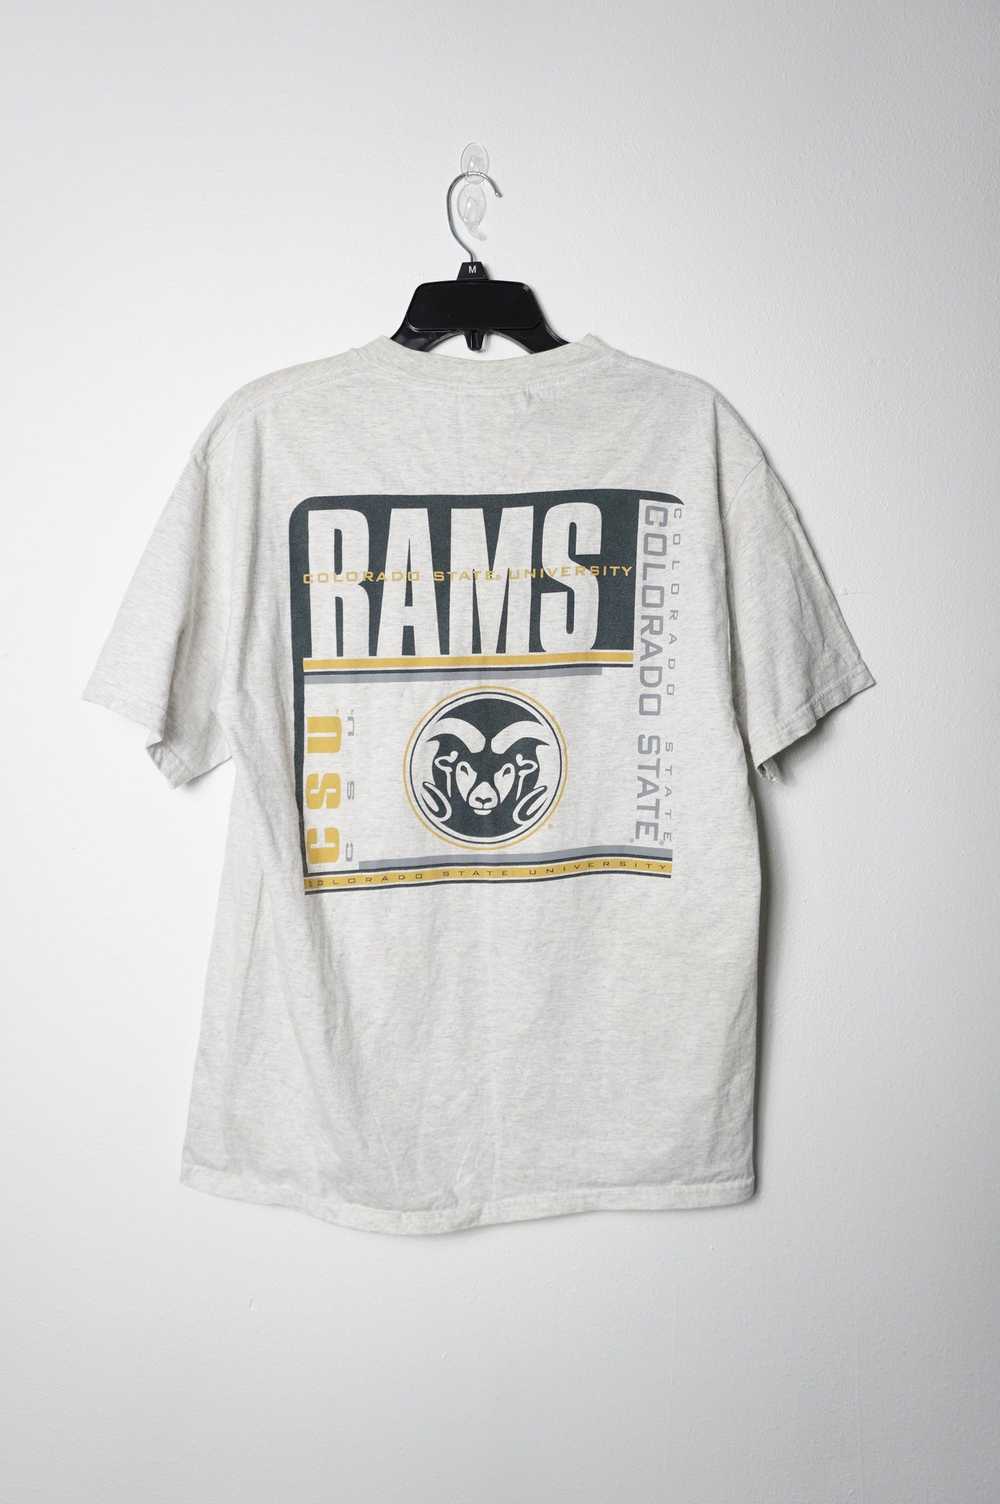 Jansport C.S.U Rams Shirt Vintage - image 5